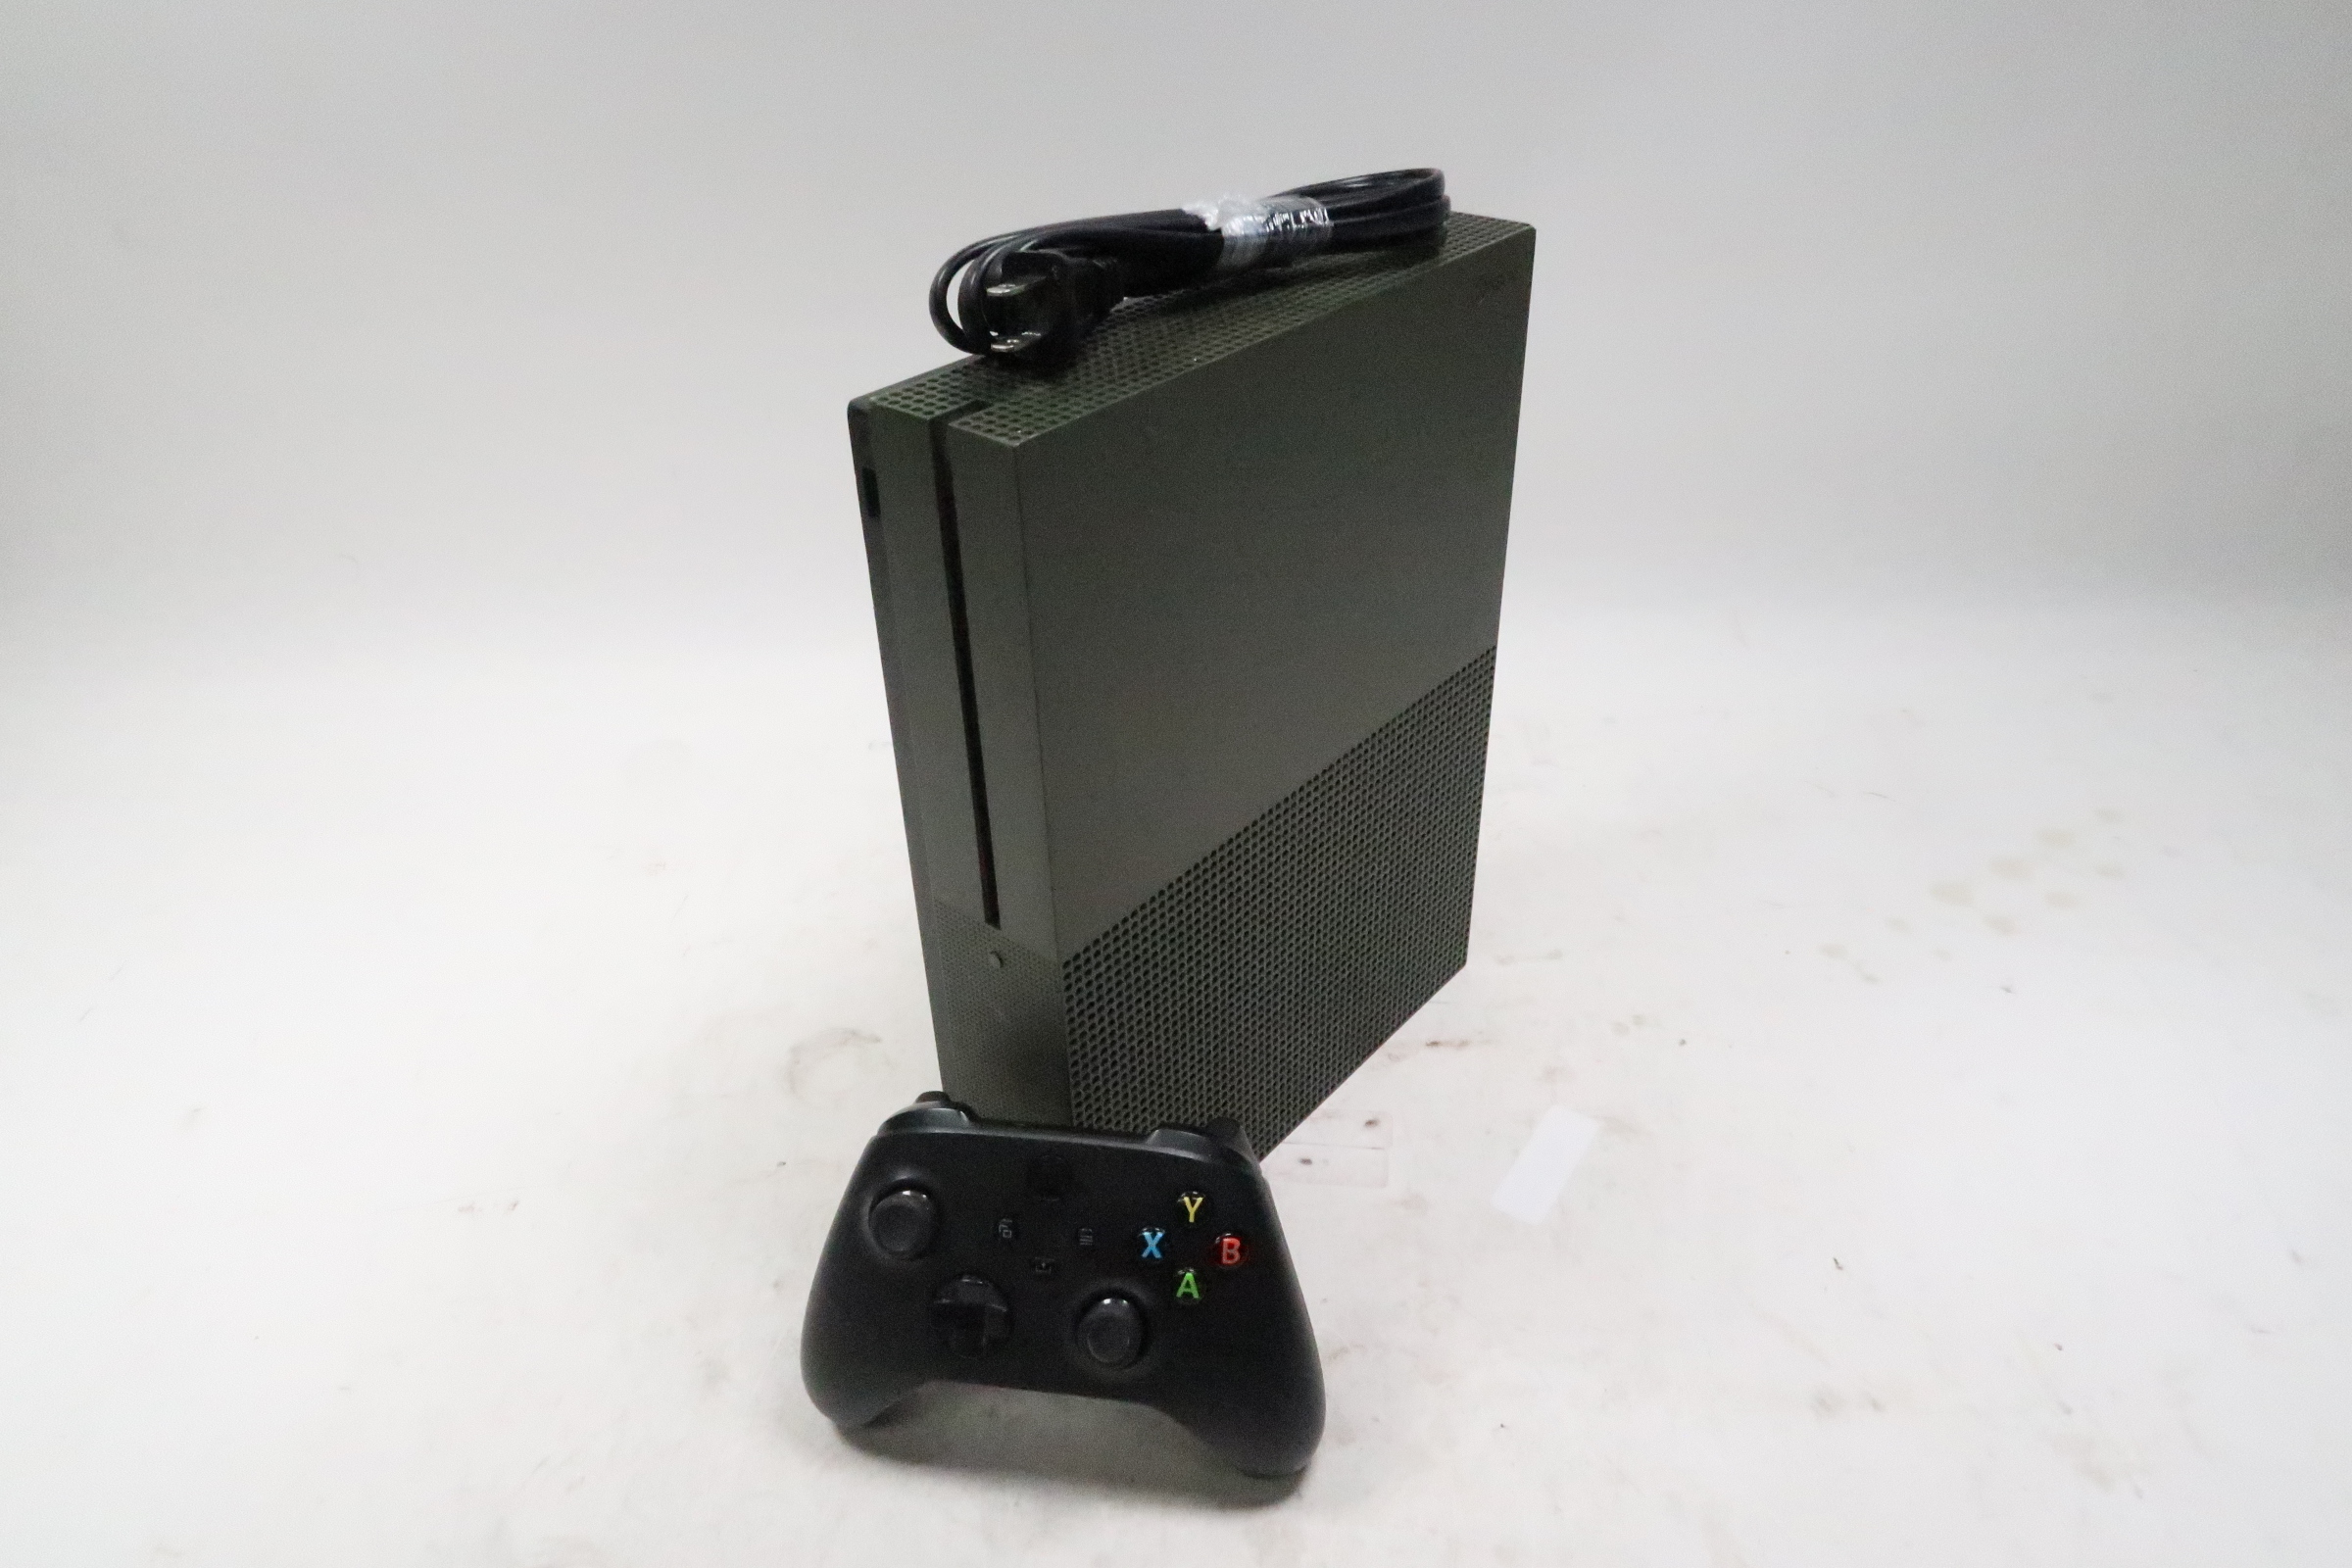 Zakenman Beschikbaar Pittig Microsoft Xbox One S Battlefield 1 Edition Green 1681 1TB Video Game Console